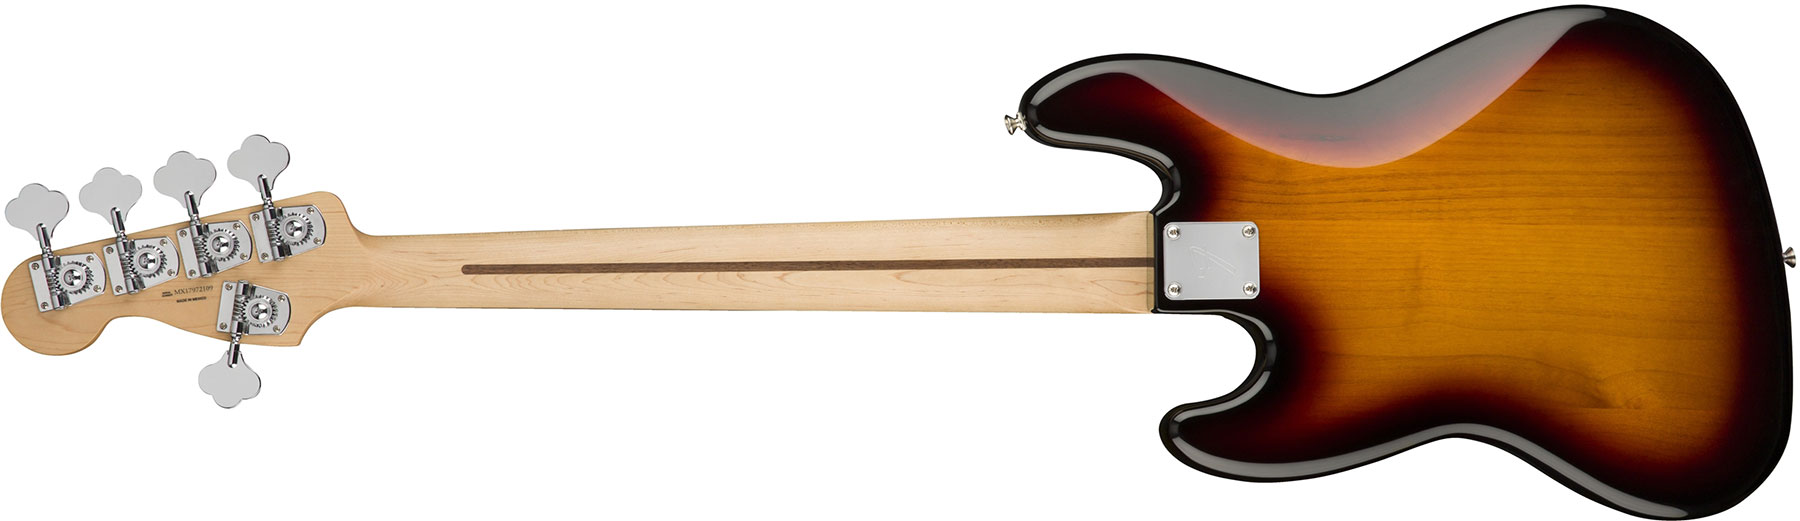 Fender Jazz Bass Player V 5-cordes Mex Pf - 3-color Sunburst - Solid body electric bass - Variation 1